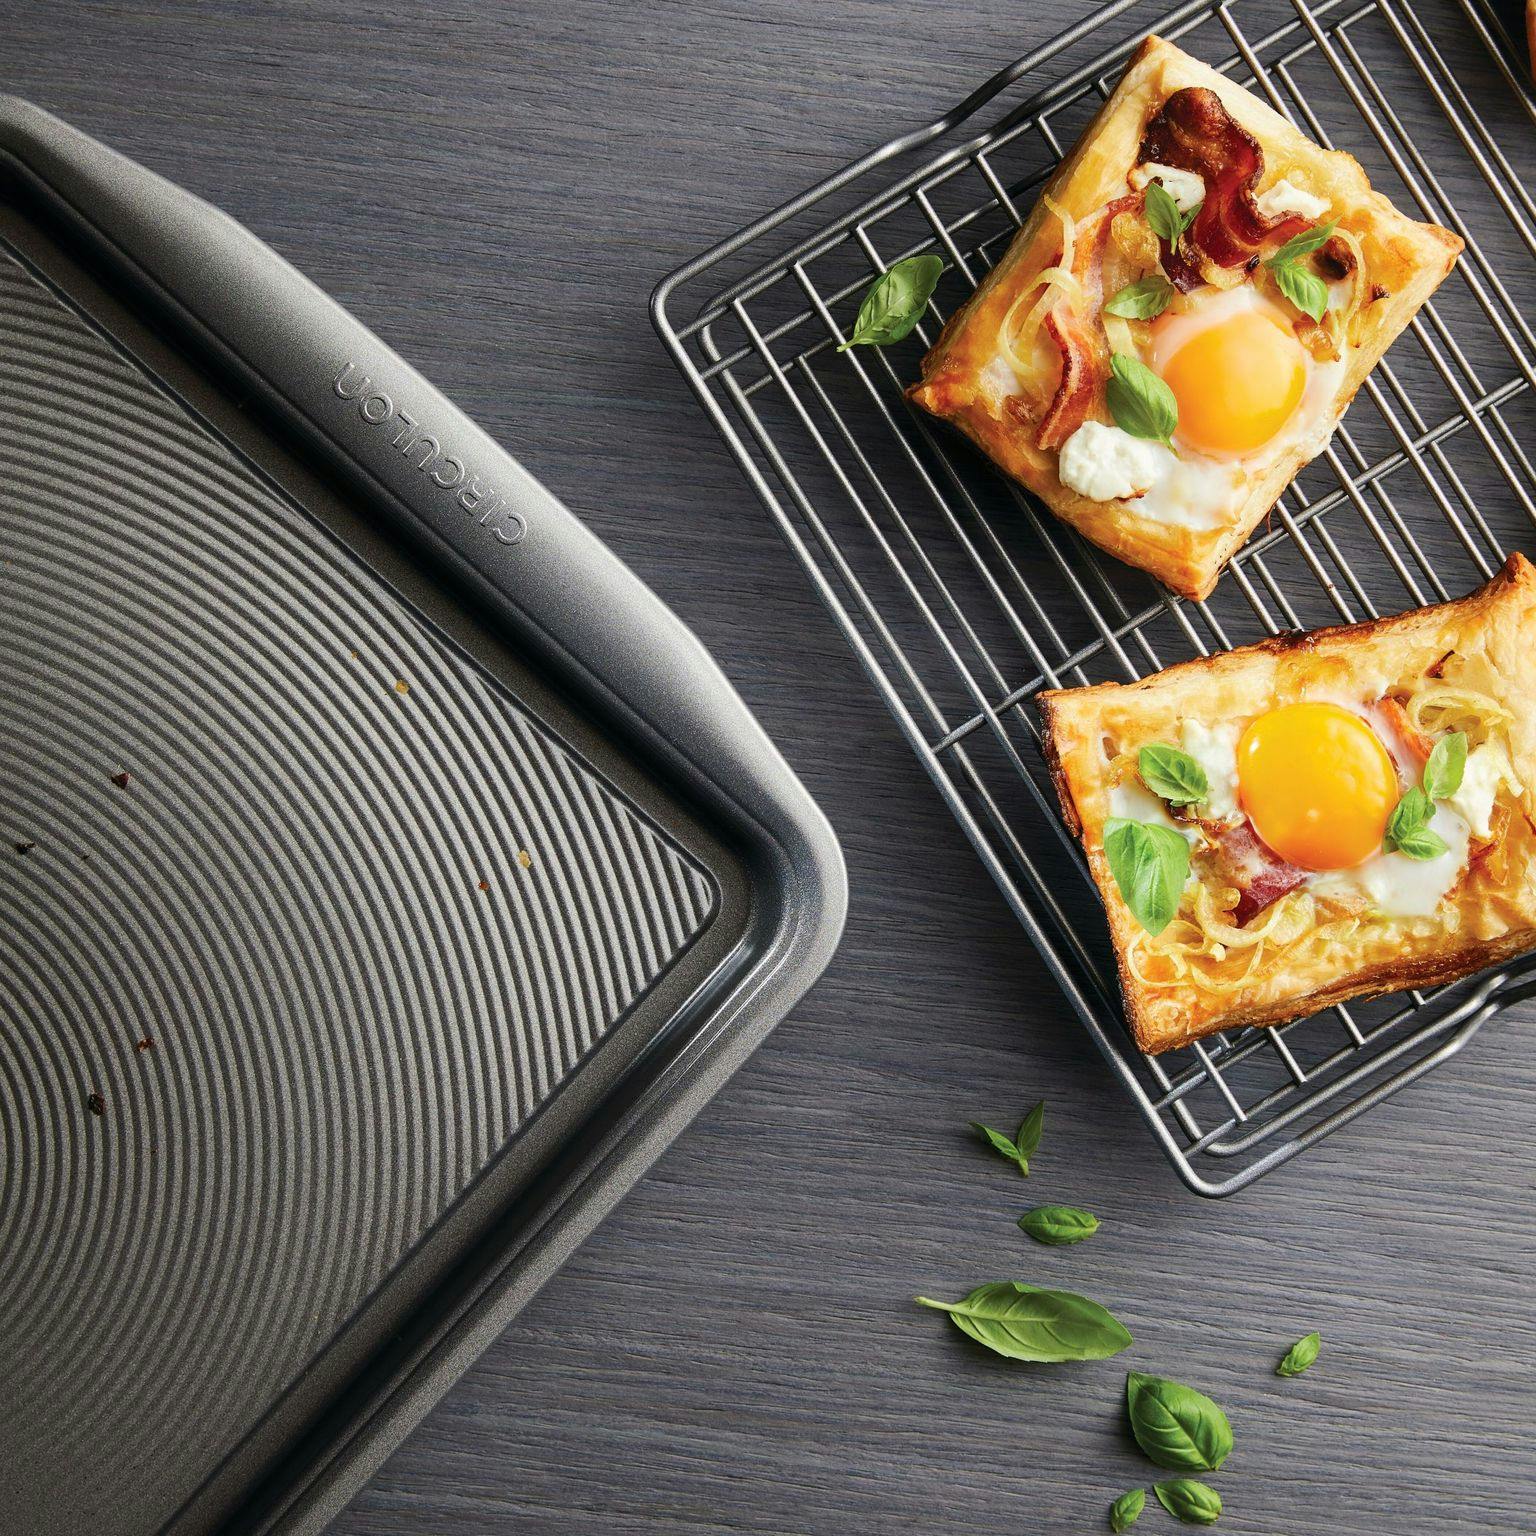 Circulon Total Bakeware Nonstick Toaster Oven & Personal Pizza Pan Baking  Set, 4-Piece